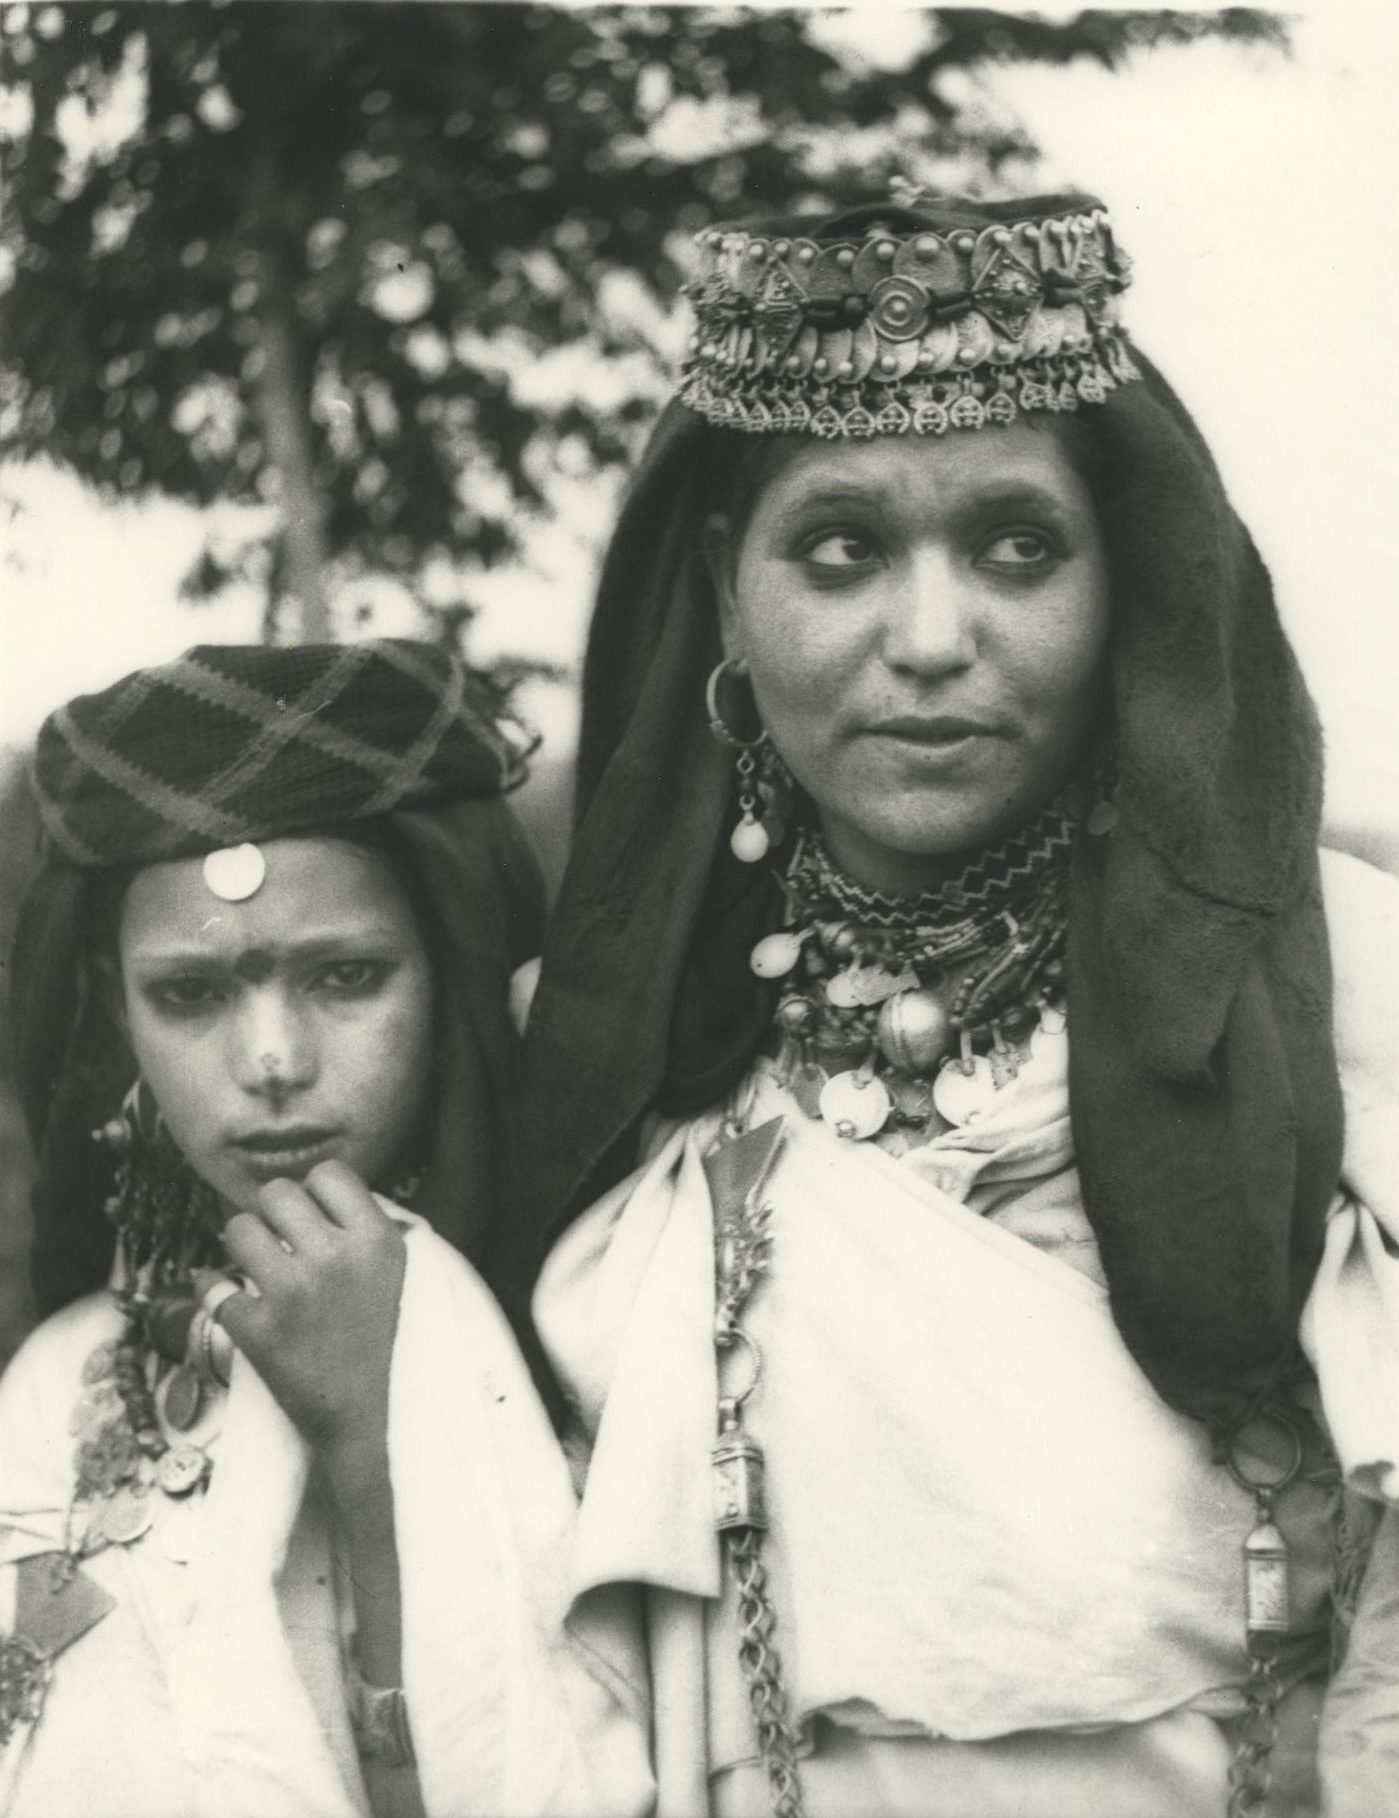 Tiara and headdress for Jewish women (Dades region, Morocco) - Judaica ...